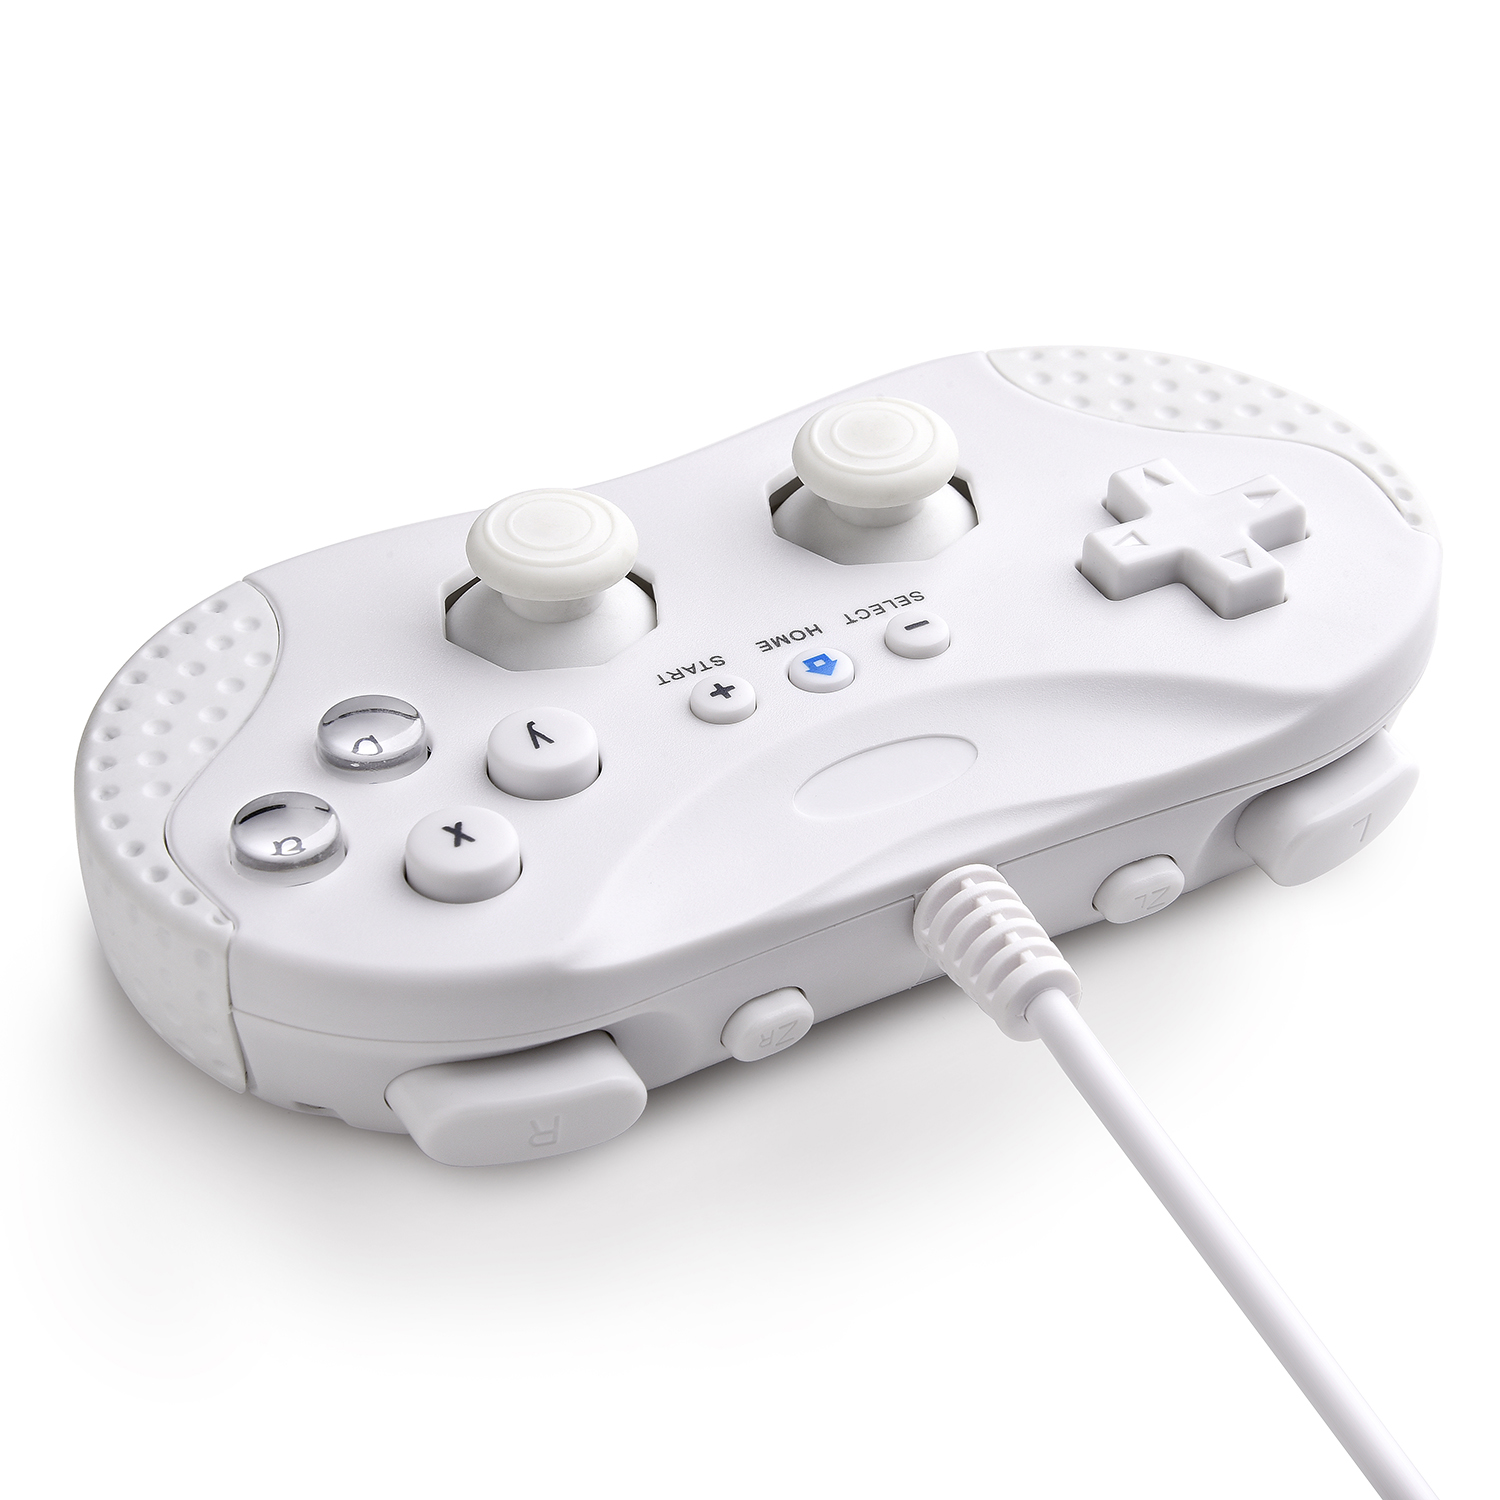 LUXMO Classic Controller Console Gampad/Joypad for Nintendo Wii/Wii U/NES Classic Edition (NES Mini)(White) - image 3 of 5